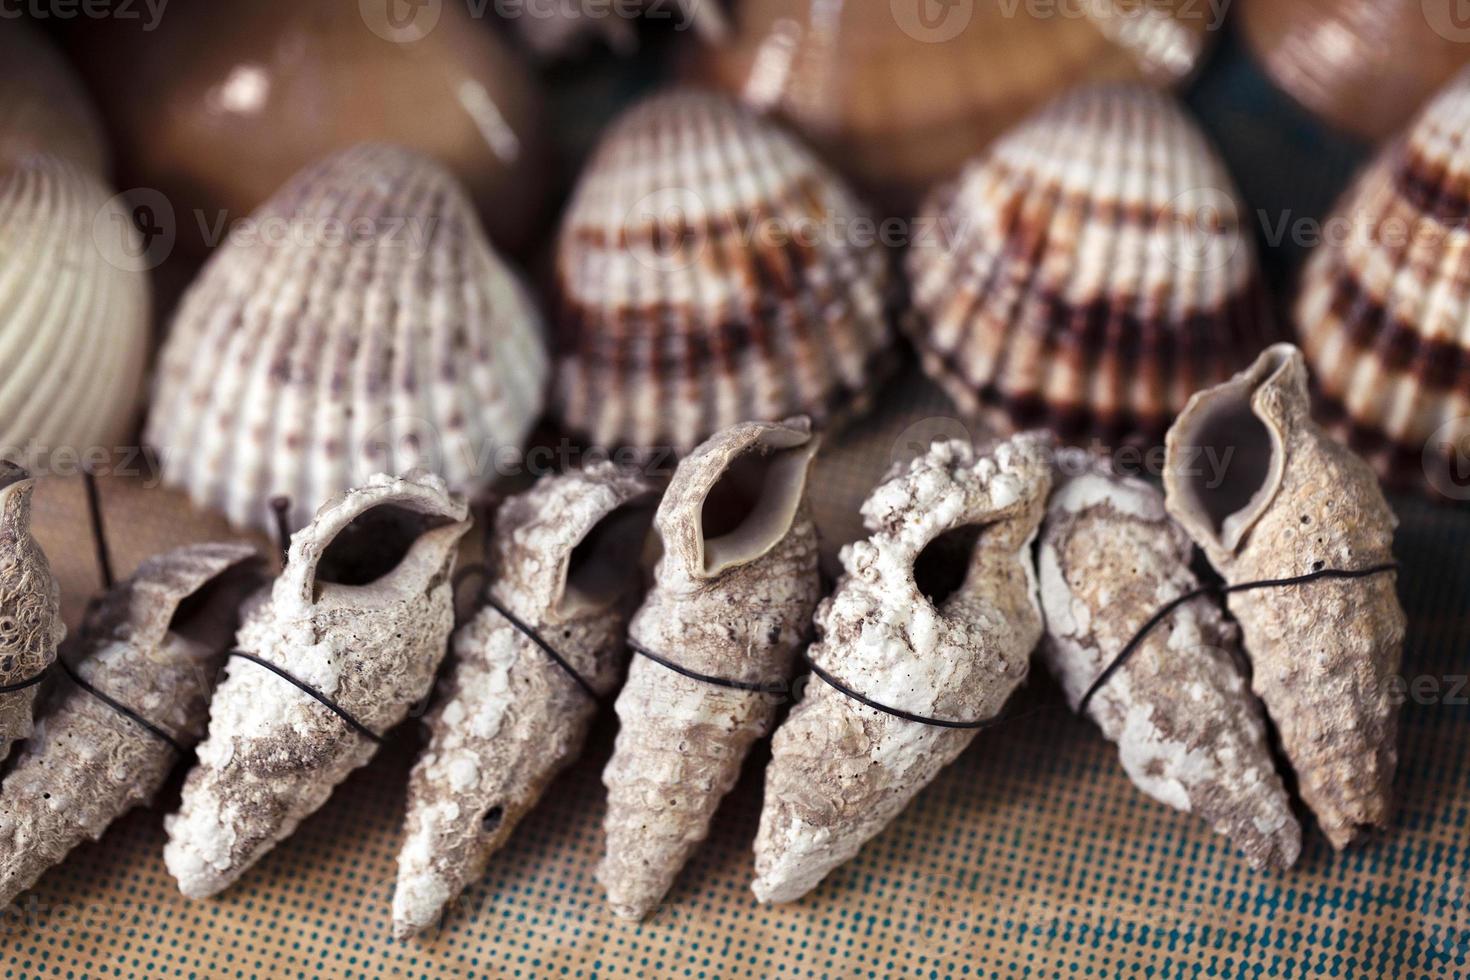 Sea Animal Dried Fish and Seashell photo